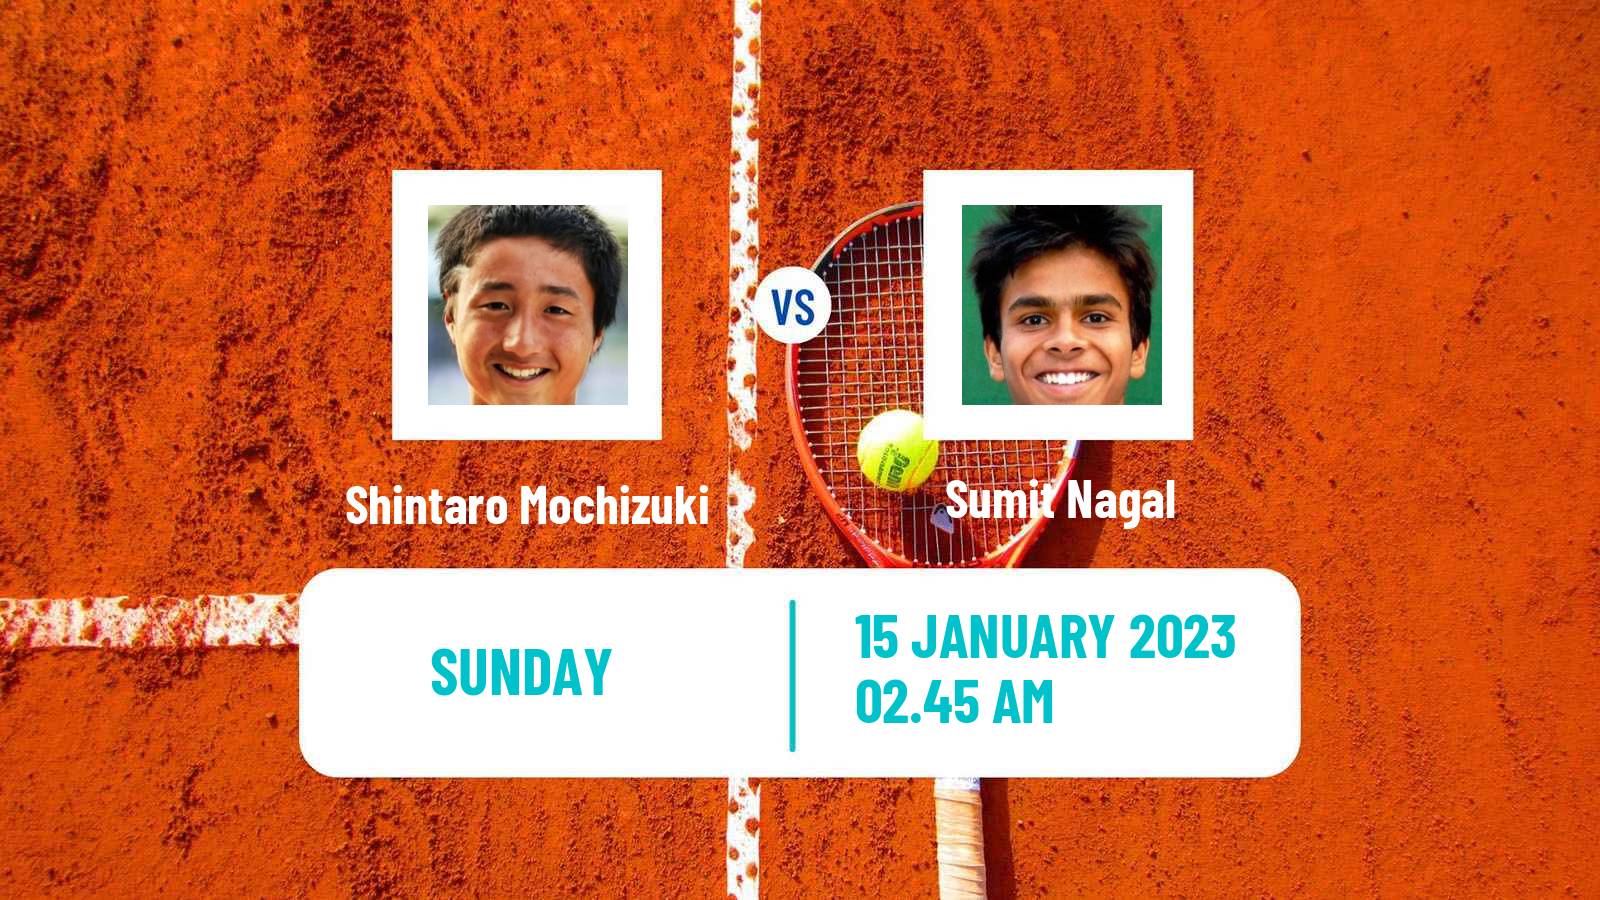 Tennis ATP Challenger Shintaro Mochizuki - Sumit Nagal